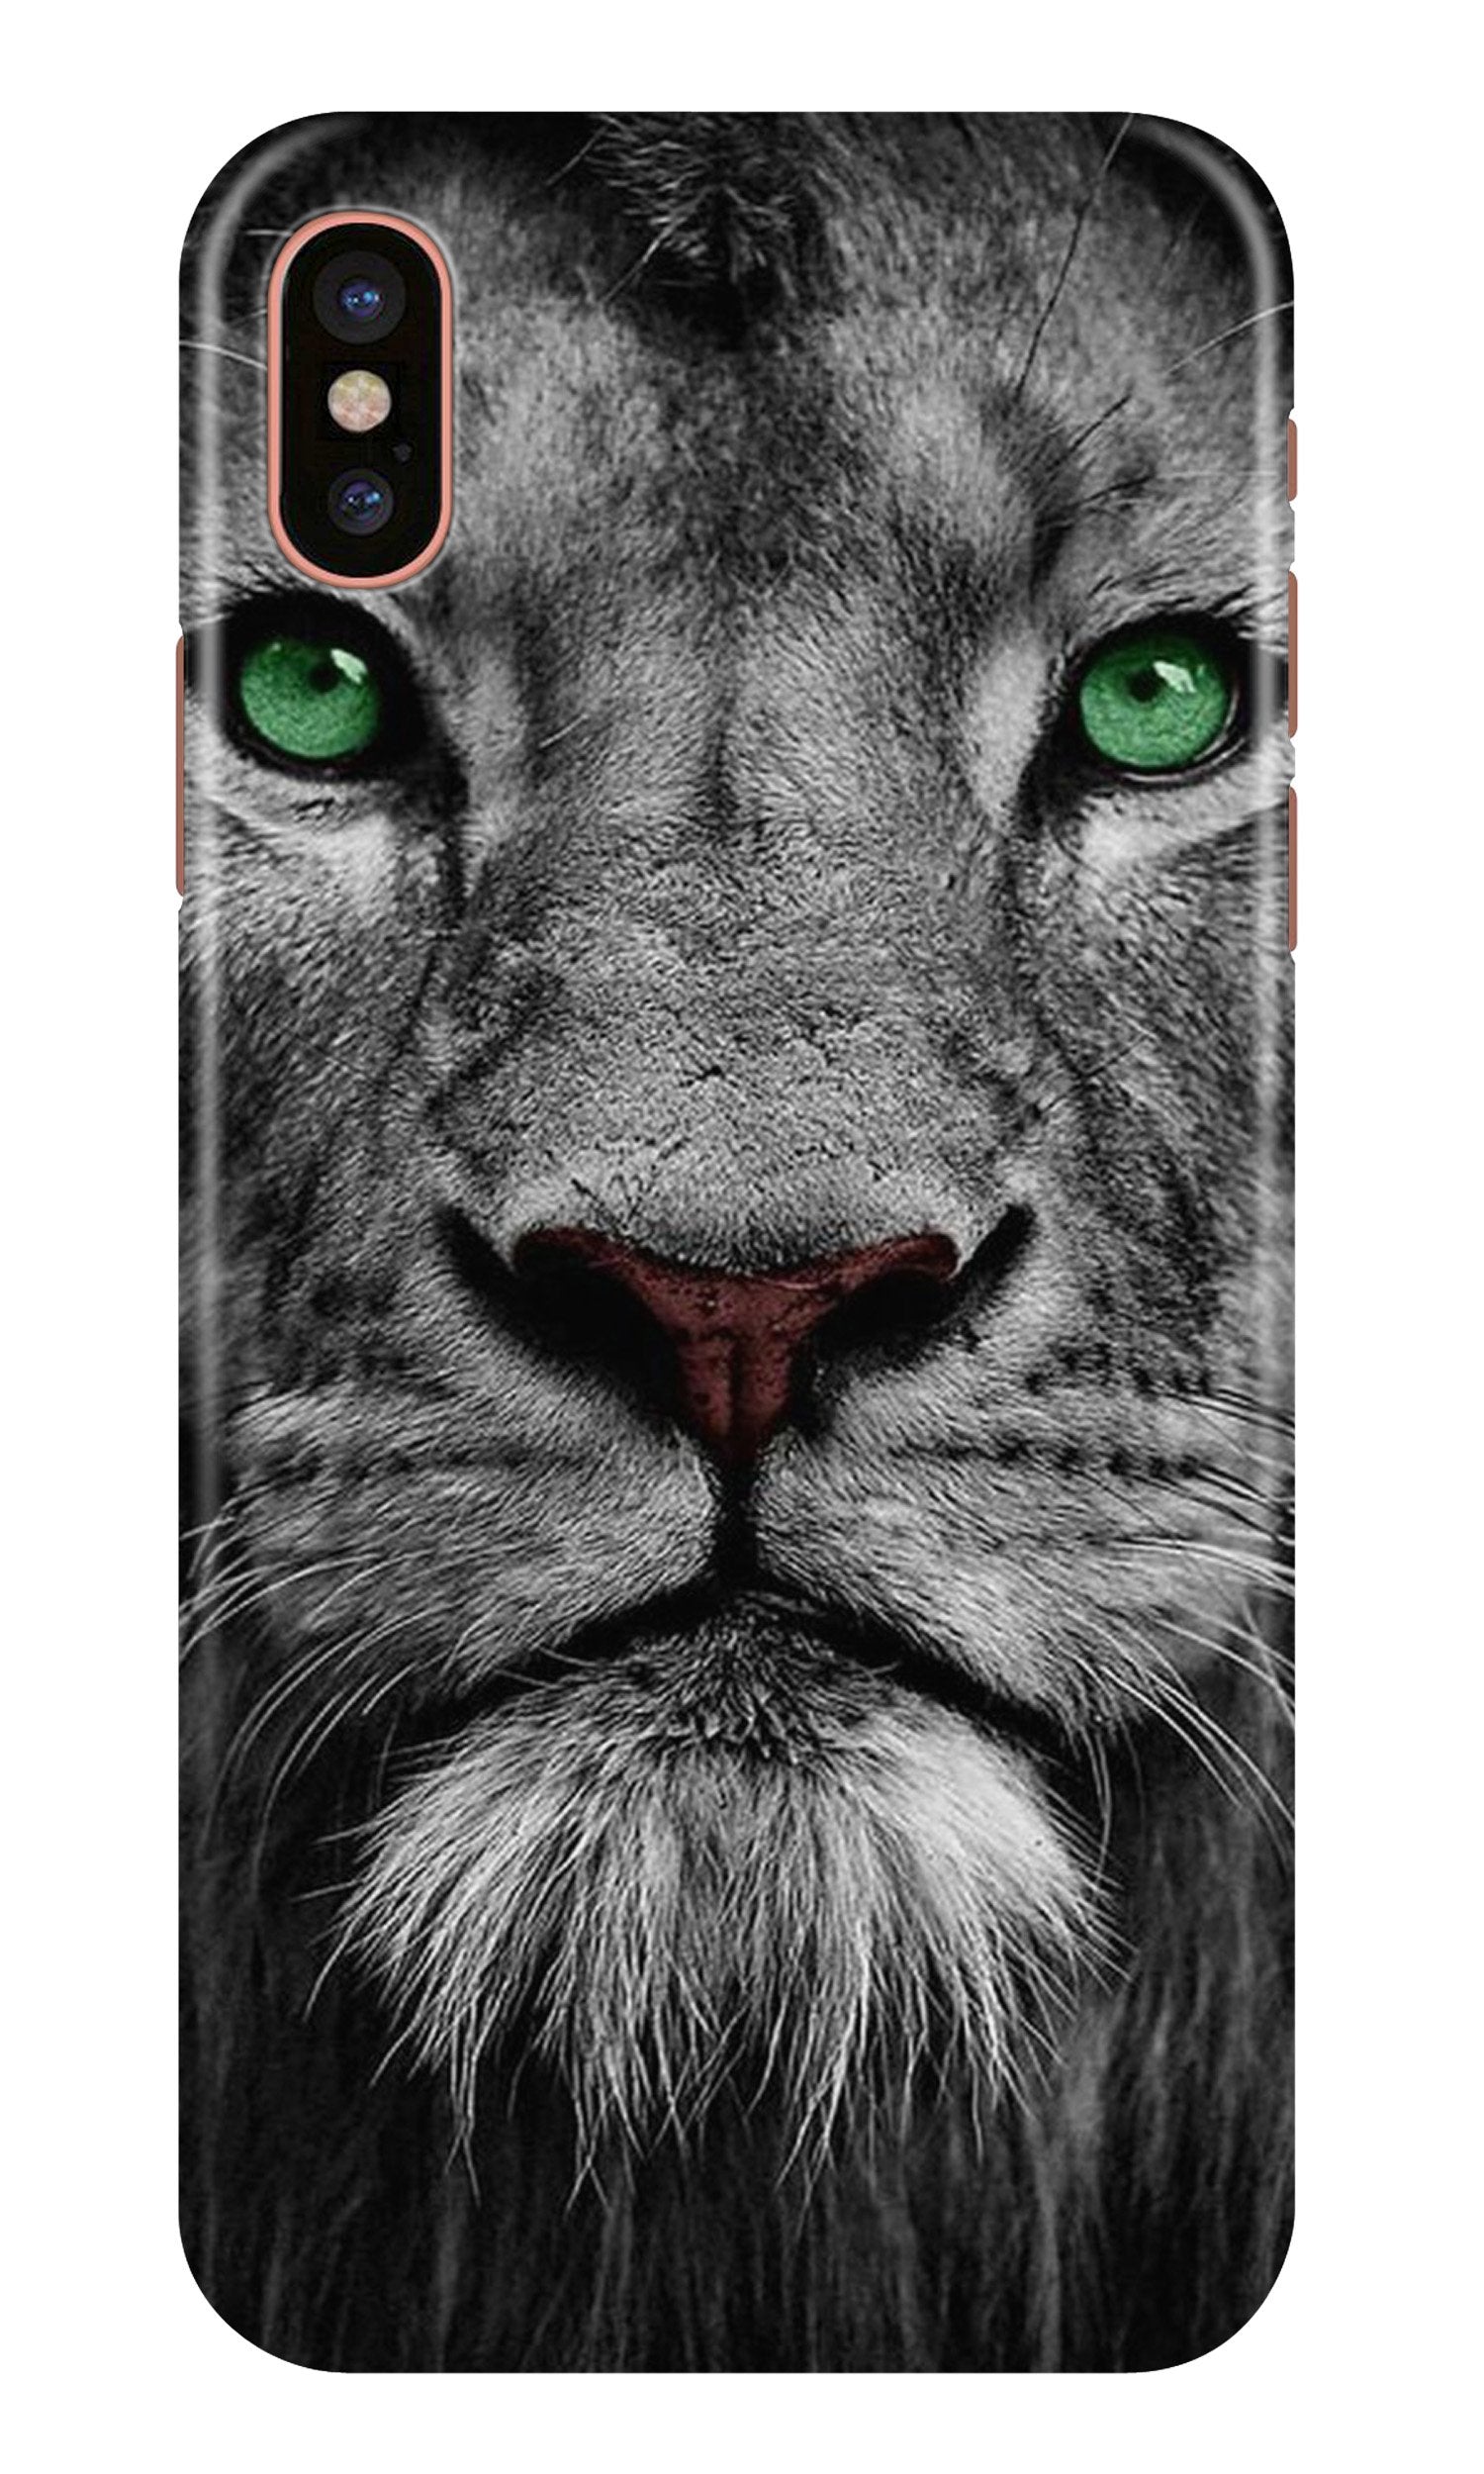 Lion Case for iPhone X (Design No. 272)